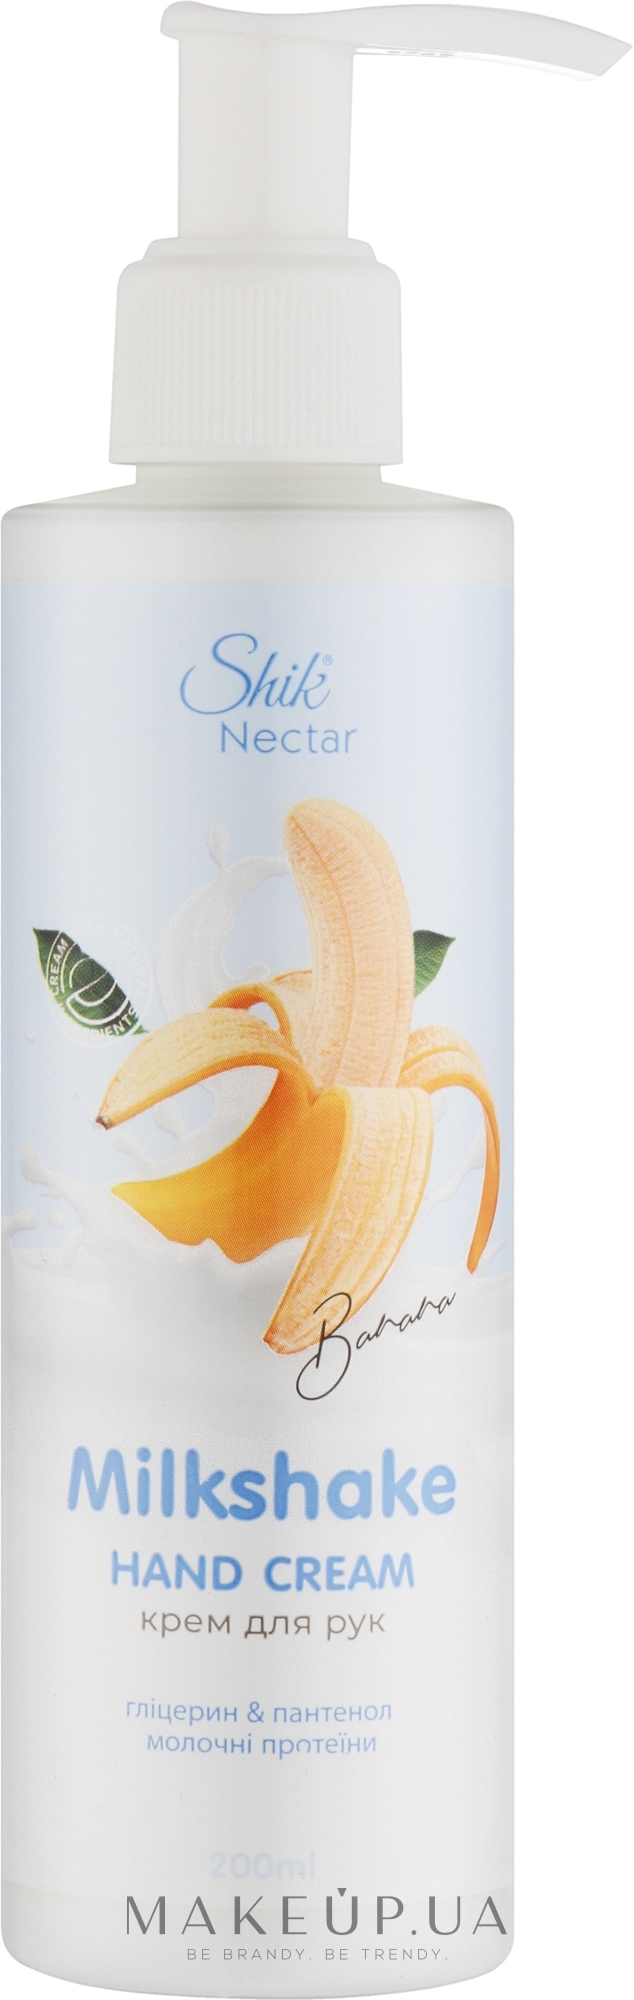 Крем для рук с ароматом банана - Shik Nectar Milkshake Hand Cream  — фото 200ml